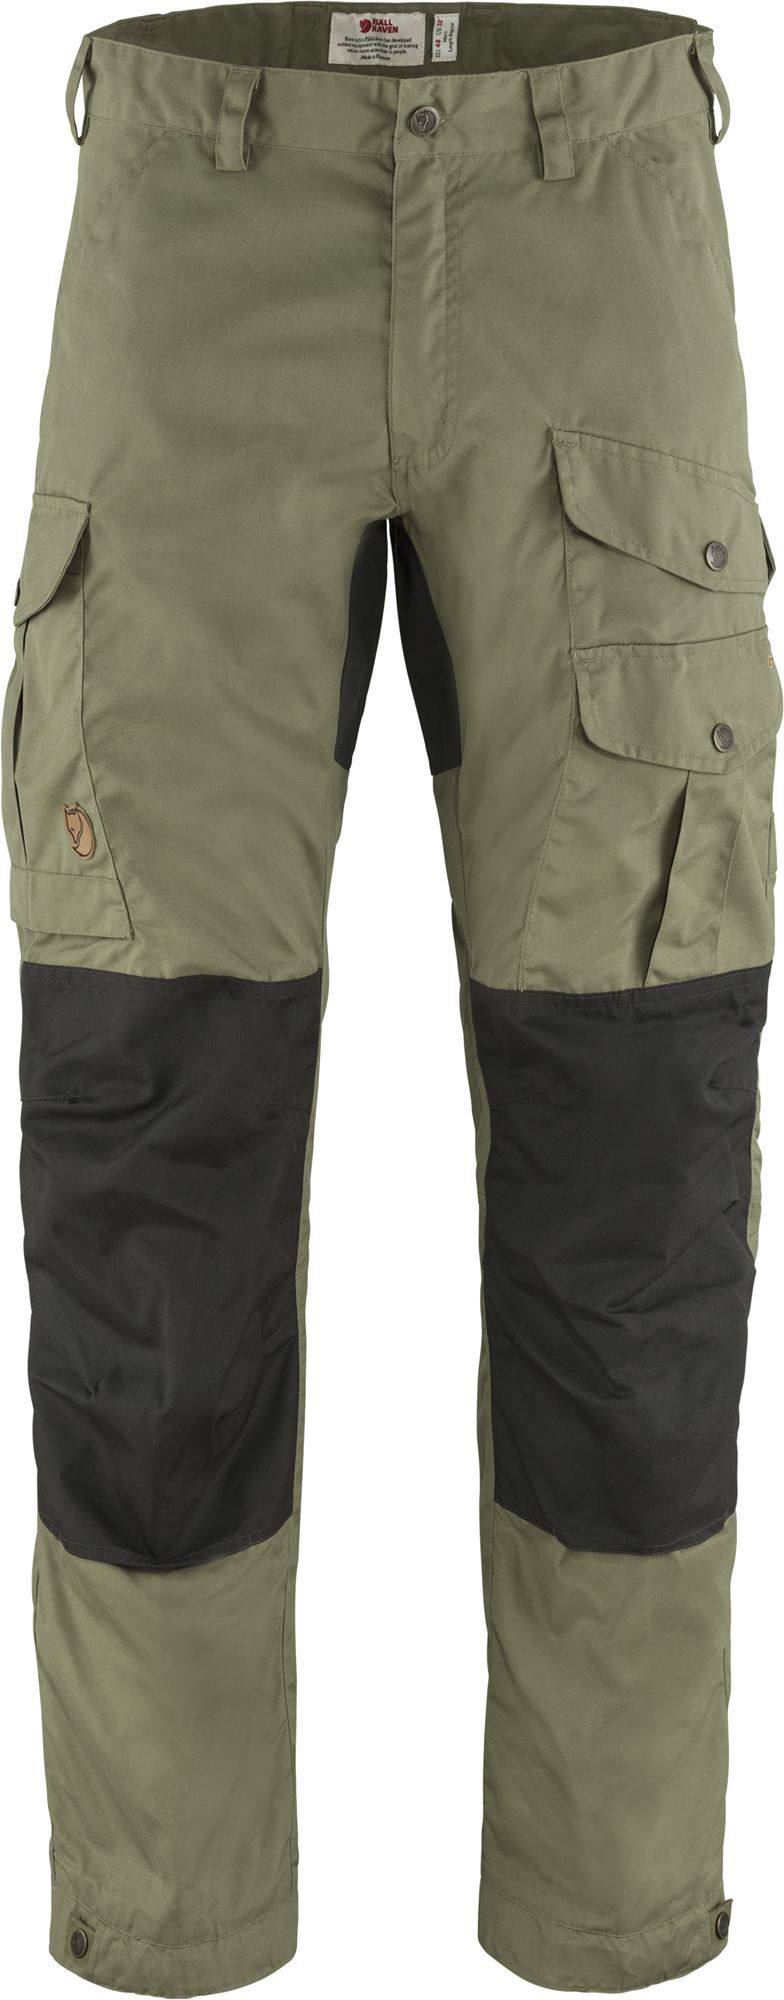 Vidda Pro Trousers Green / Gray 50